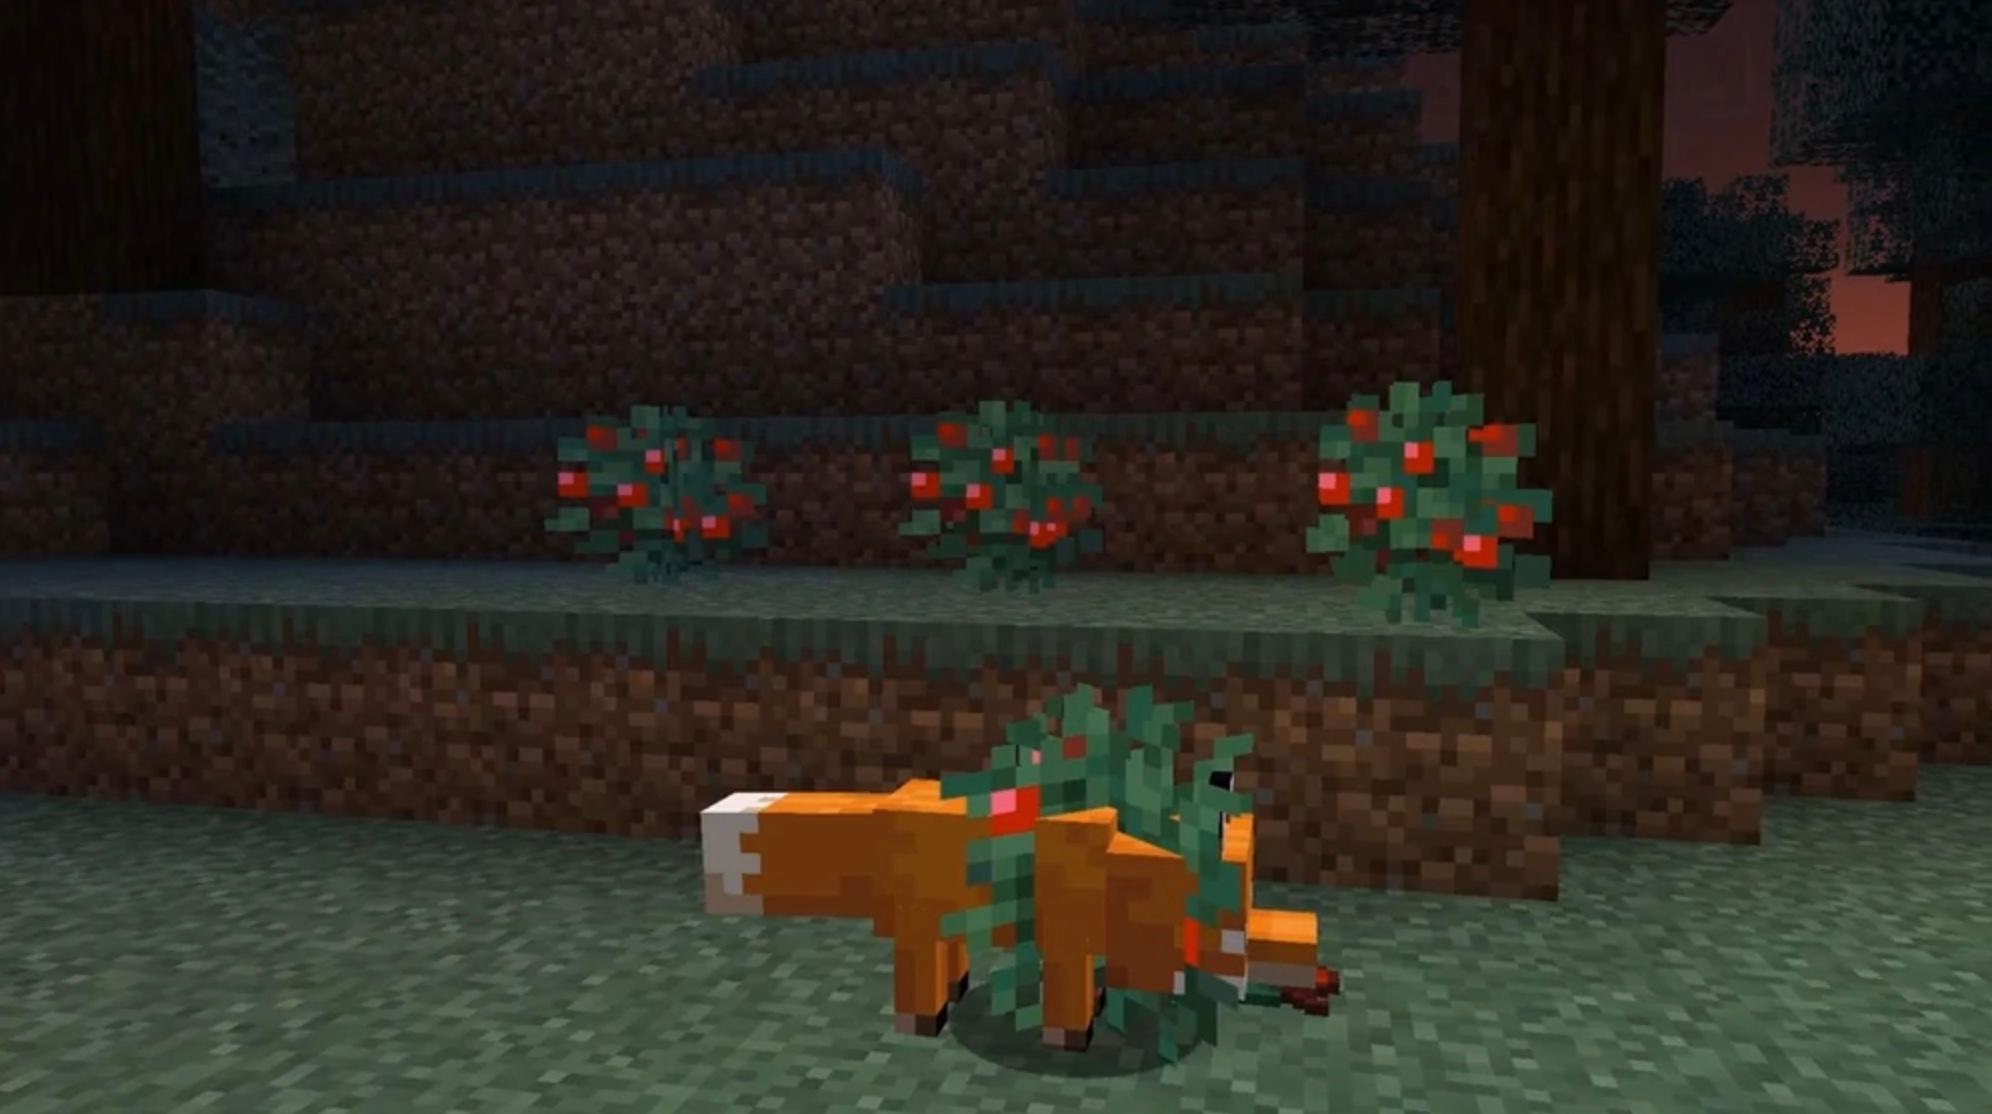 Fox taking a sweet berry in 'Minecraft'